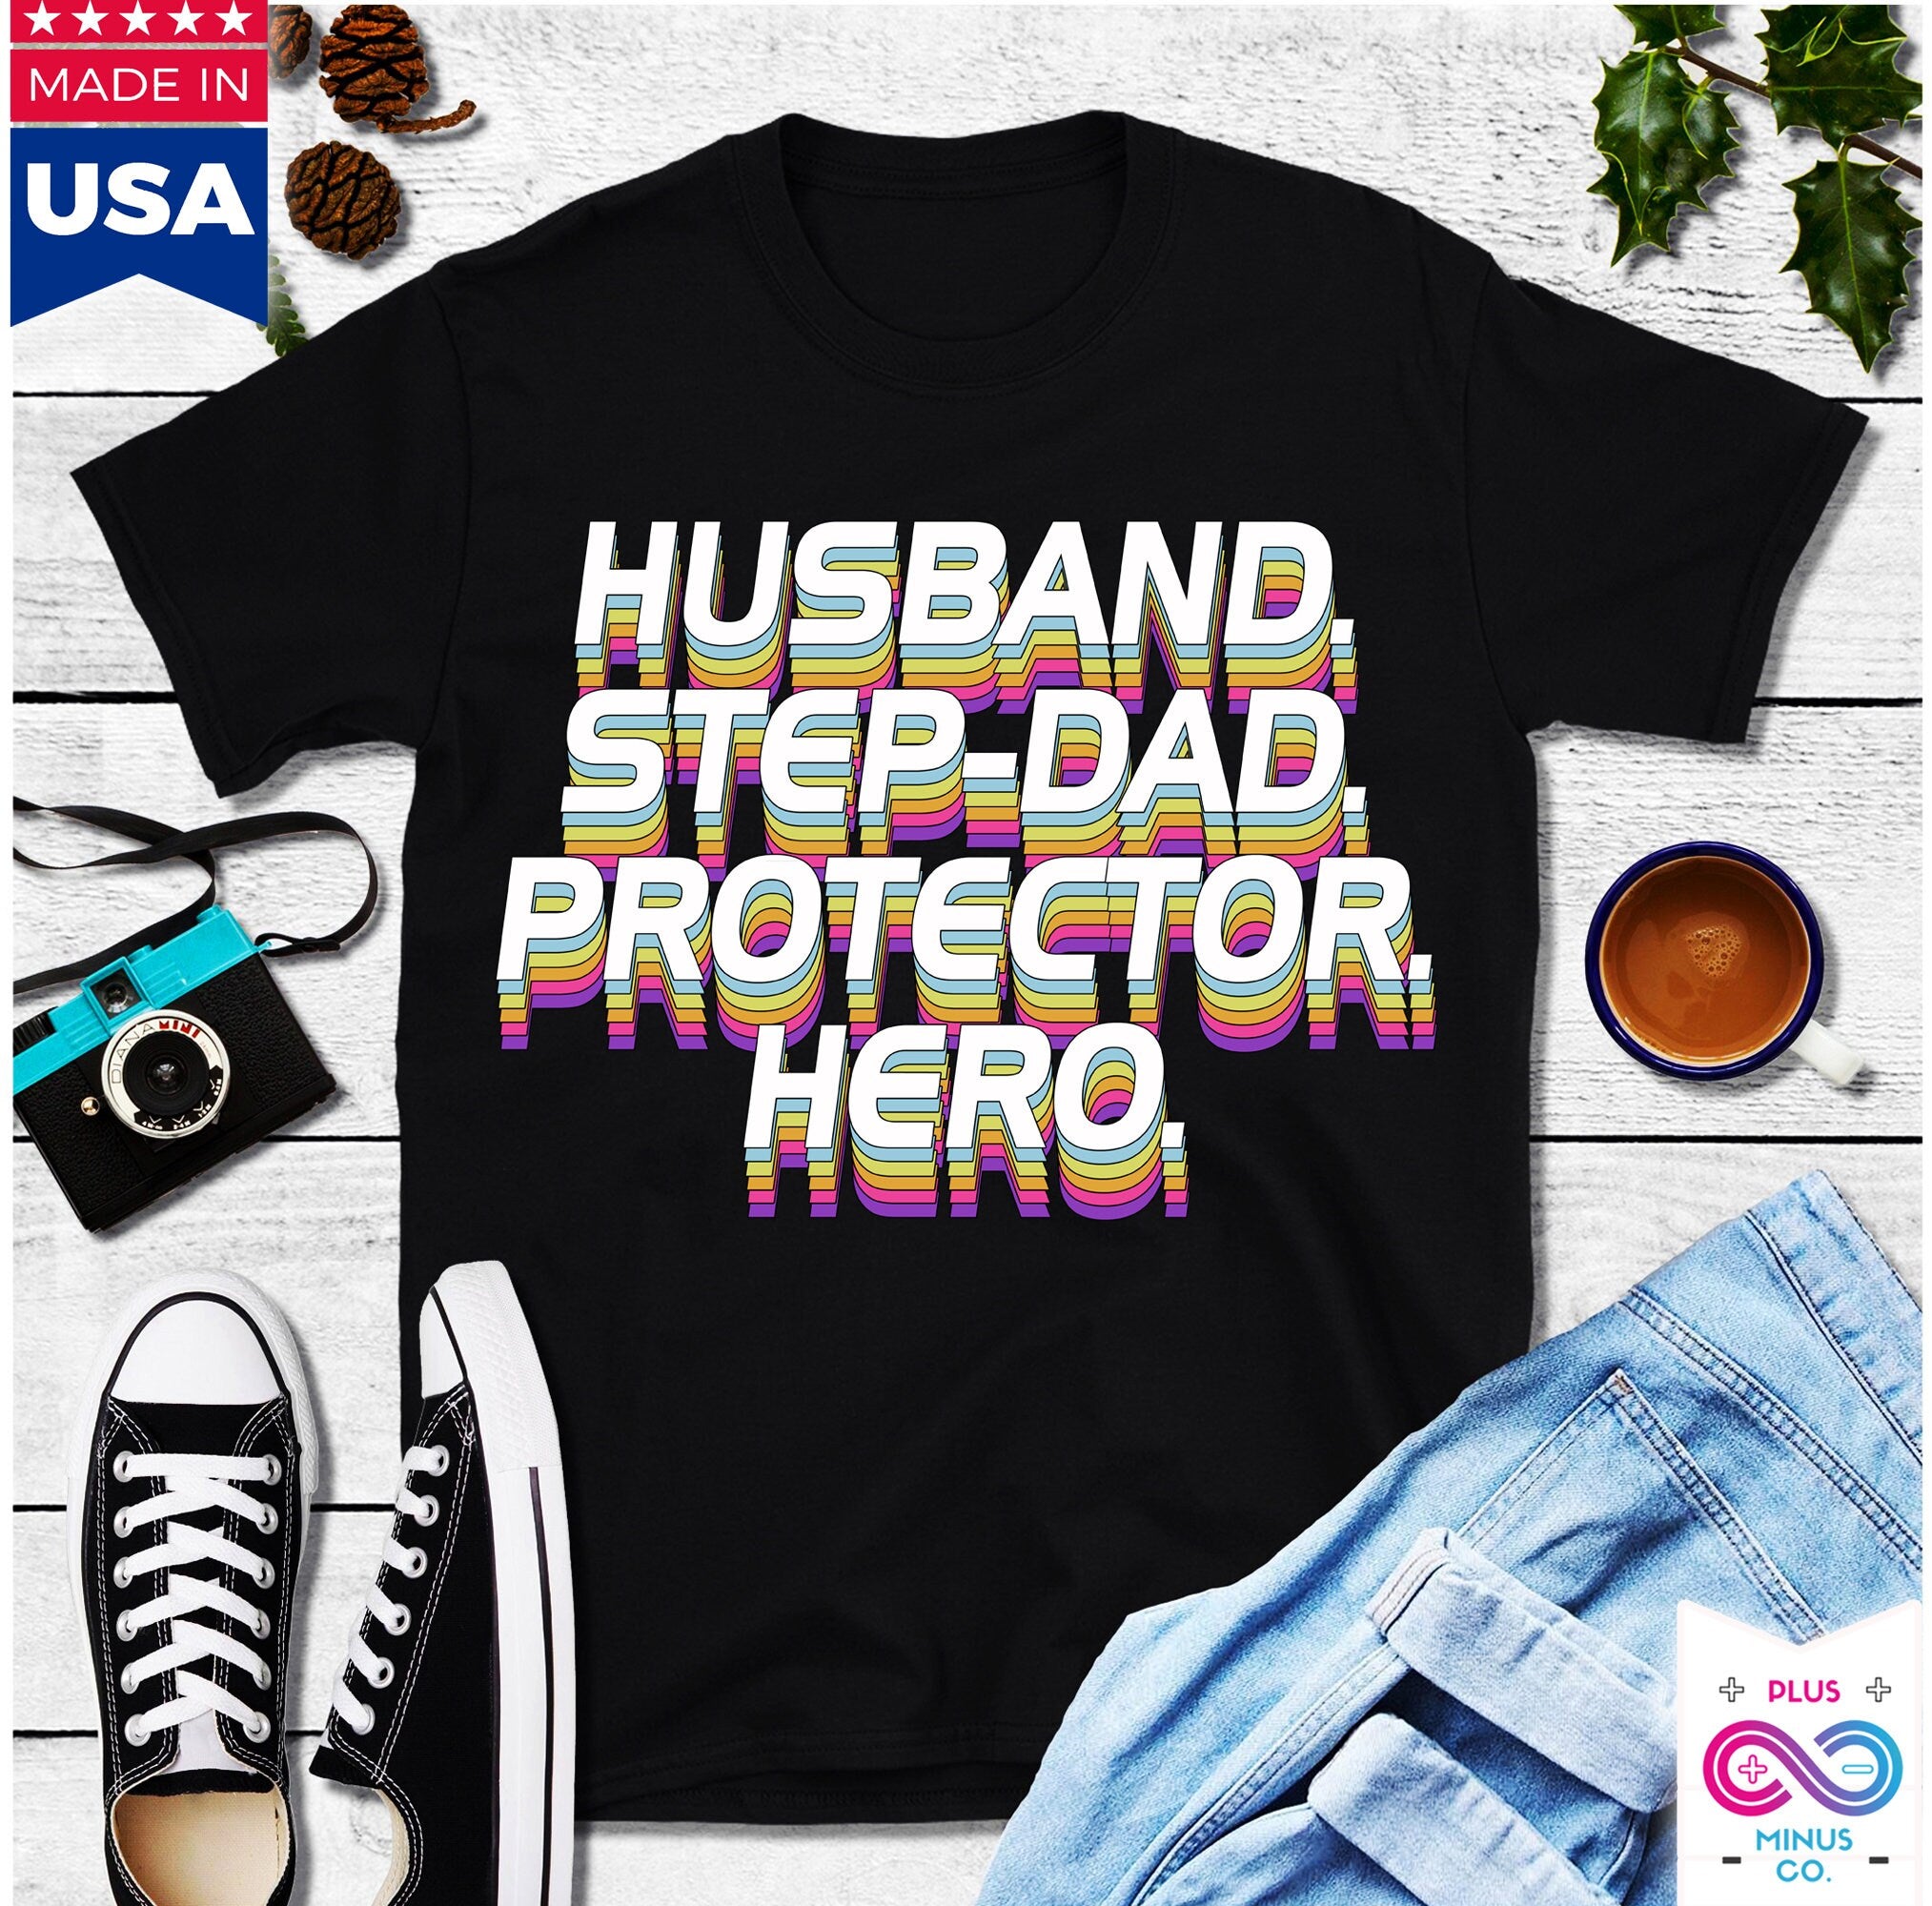 Make Daddy Protector Hero T-shirts, Fars Dagspresent, Personlig Pappaskjorta, Hero-skjorta, Fars Dagspresent, Pappa-T-shirt, Fars Dagströja - plusminusco.com